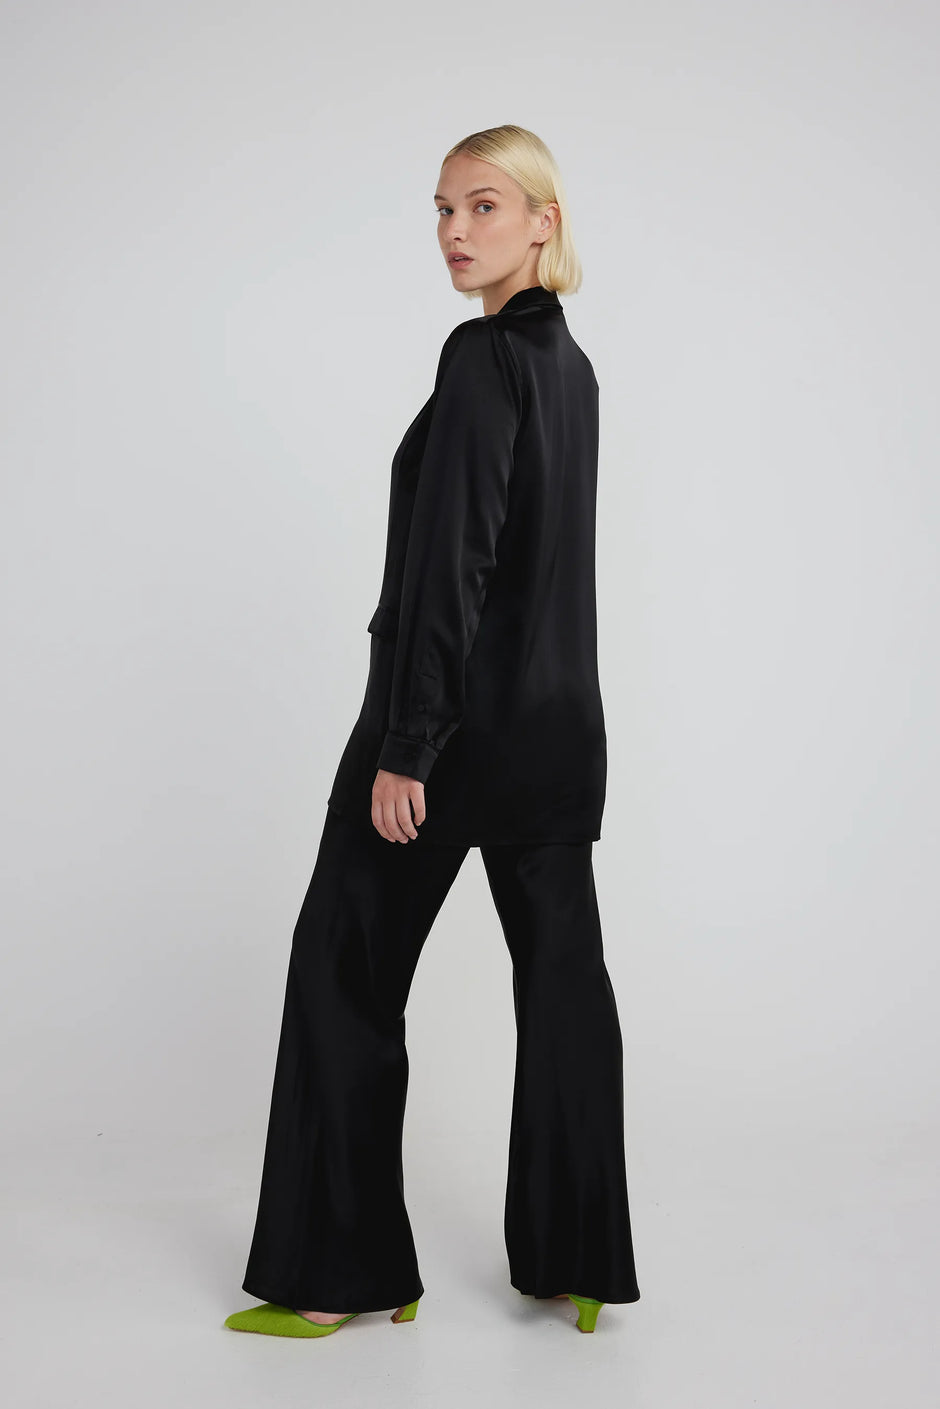 Silk Laundry black silk bias cut pants trousers